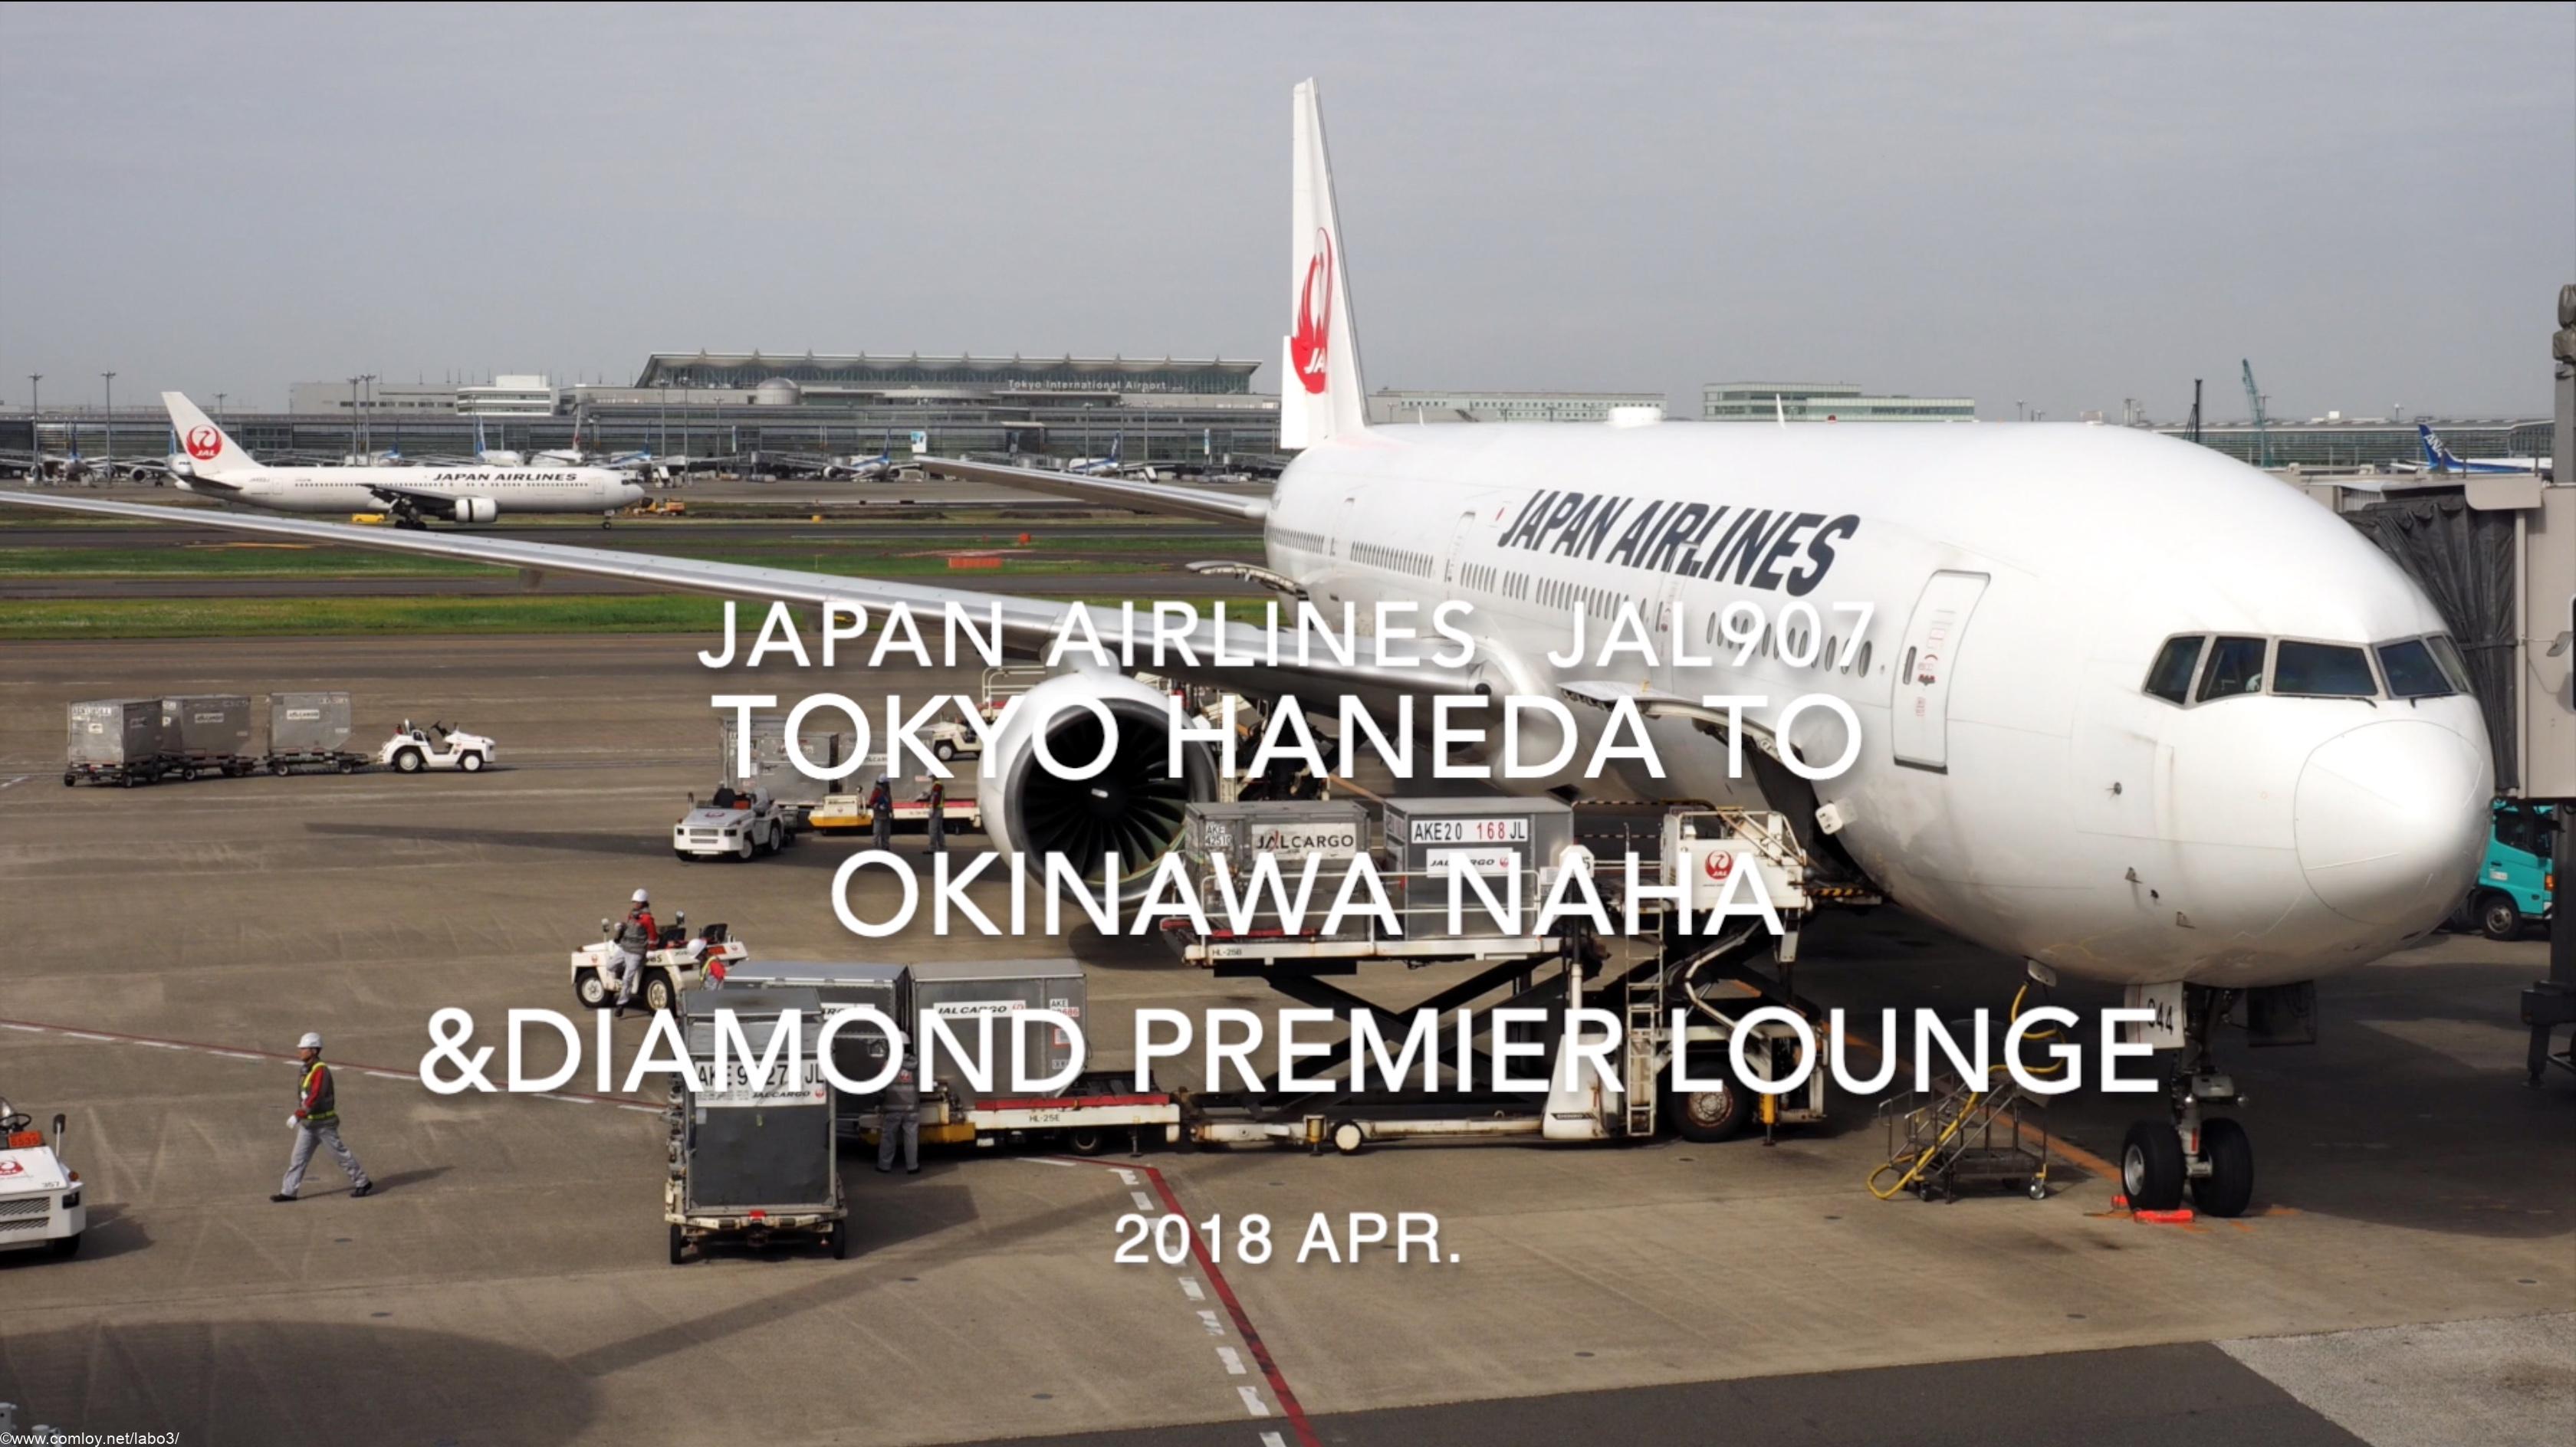 【Flight Report】Japan Airlines JAL907 TOKYO HANEDA to OKINAWA NAHA and Diamond Premier Lounge 2018 APR 日本航空 羽田 - 那覇 搭乗記